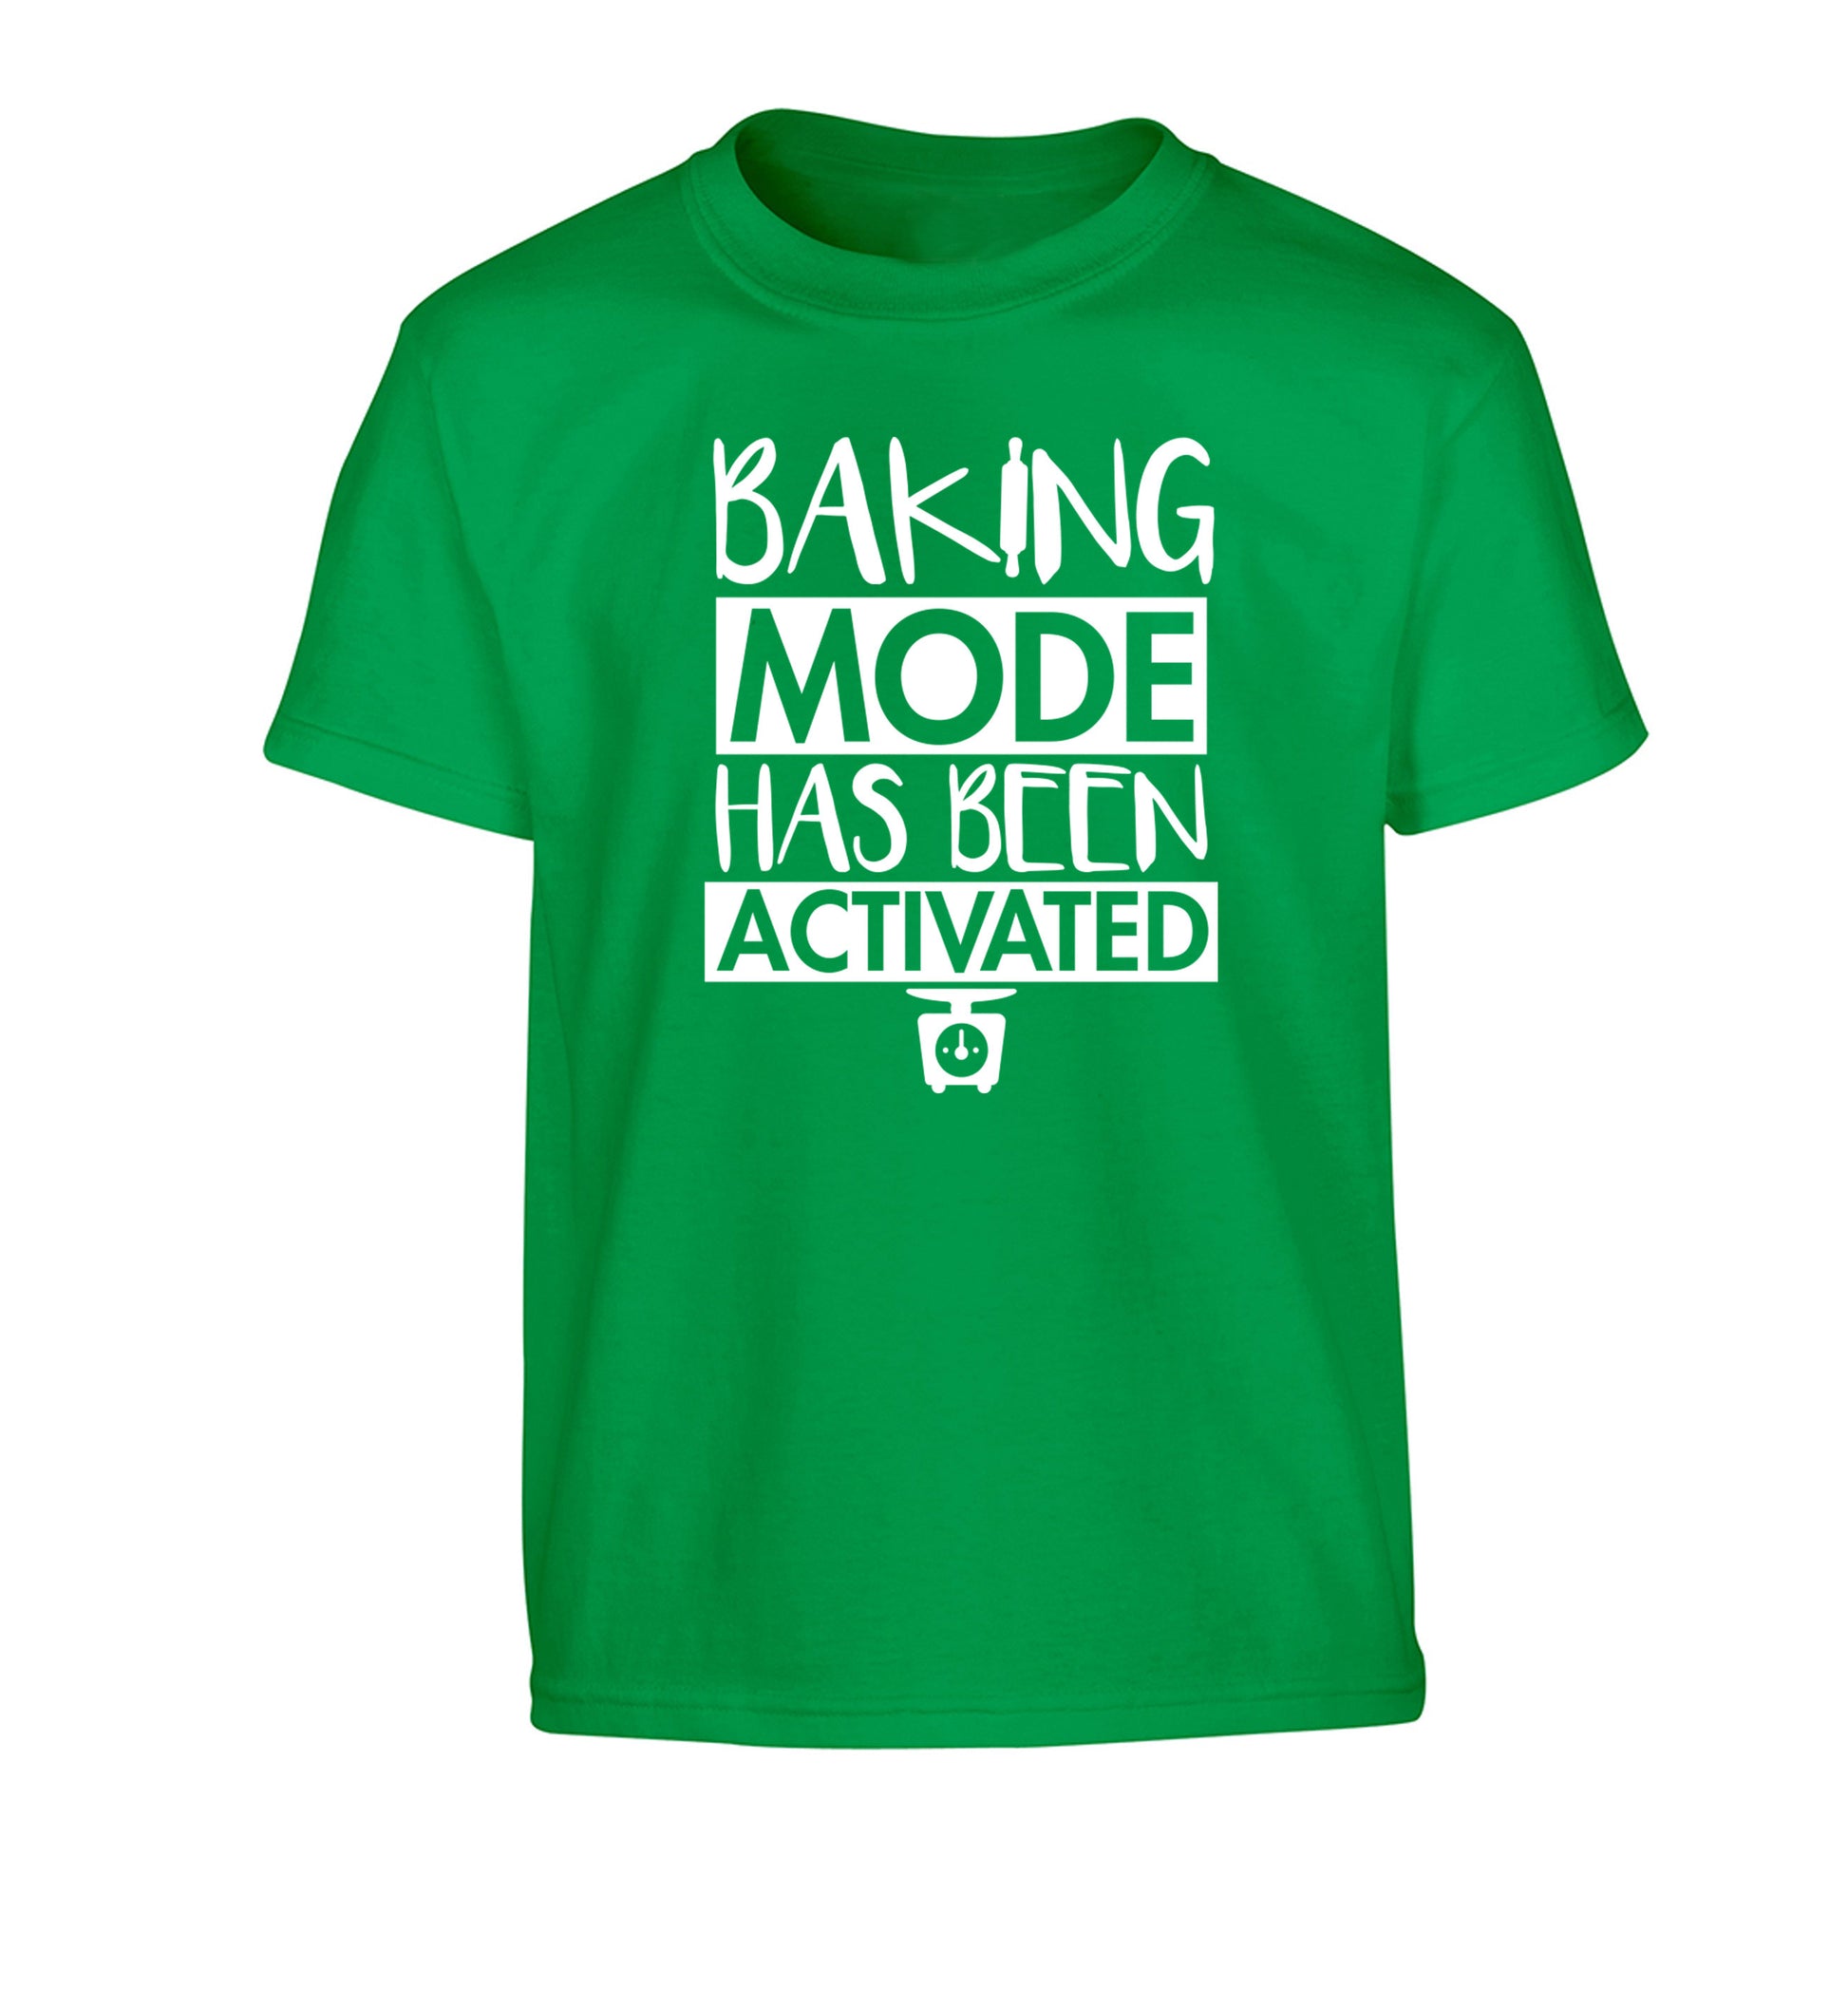 Baking mode has been activated Children's green Tshirt 12-14 Years